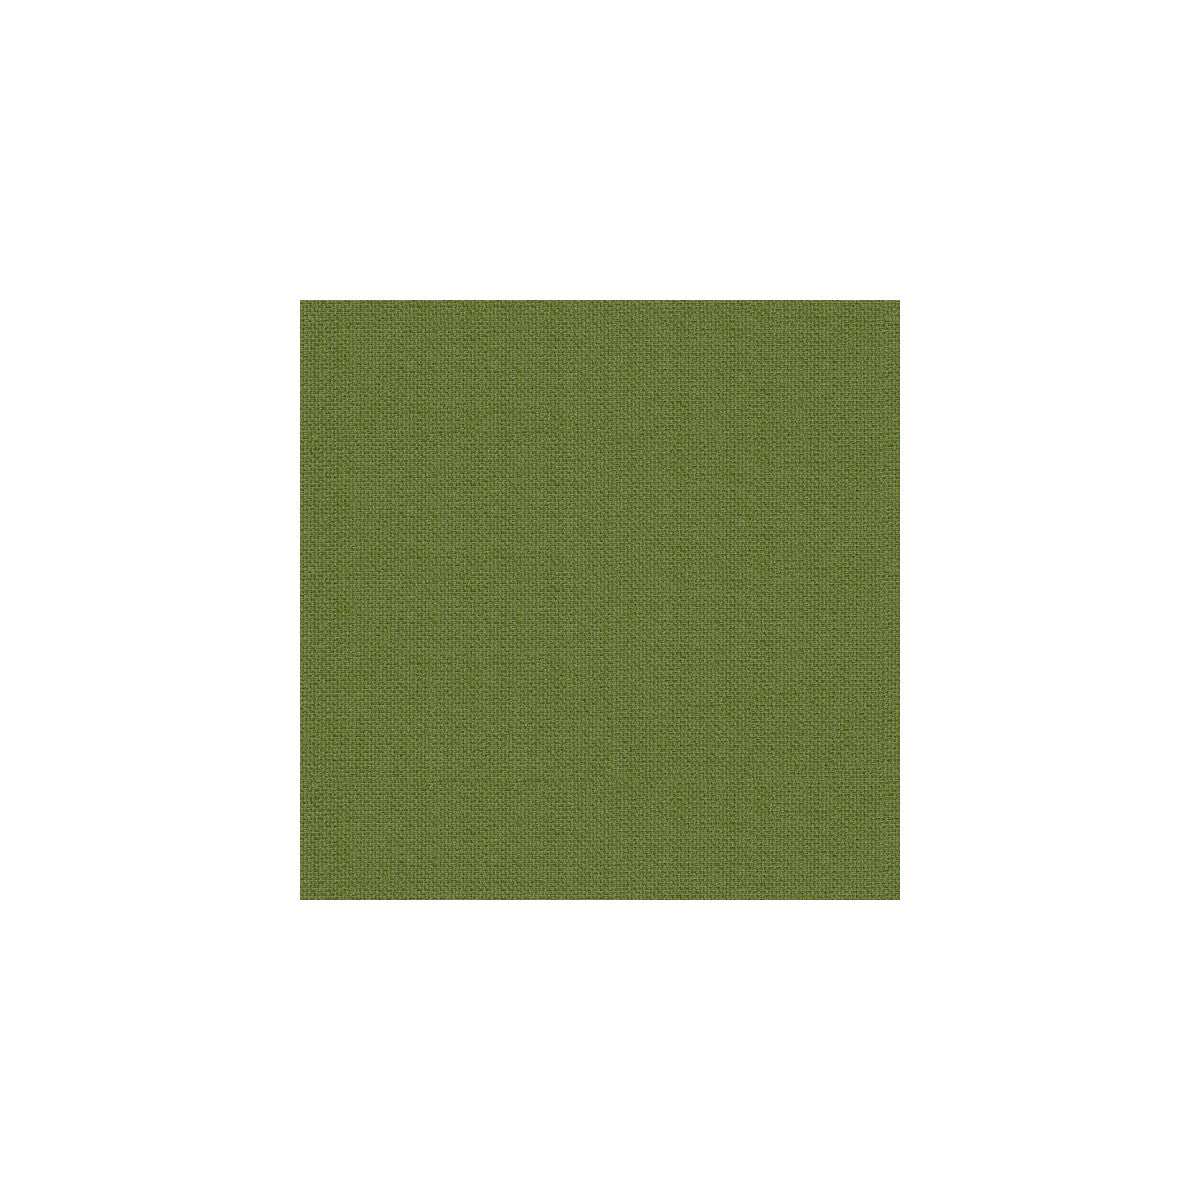 Soho Solid fabric in leaf color - pattern 32255.3.0 - by Kravet Smart